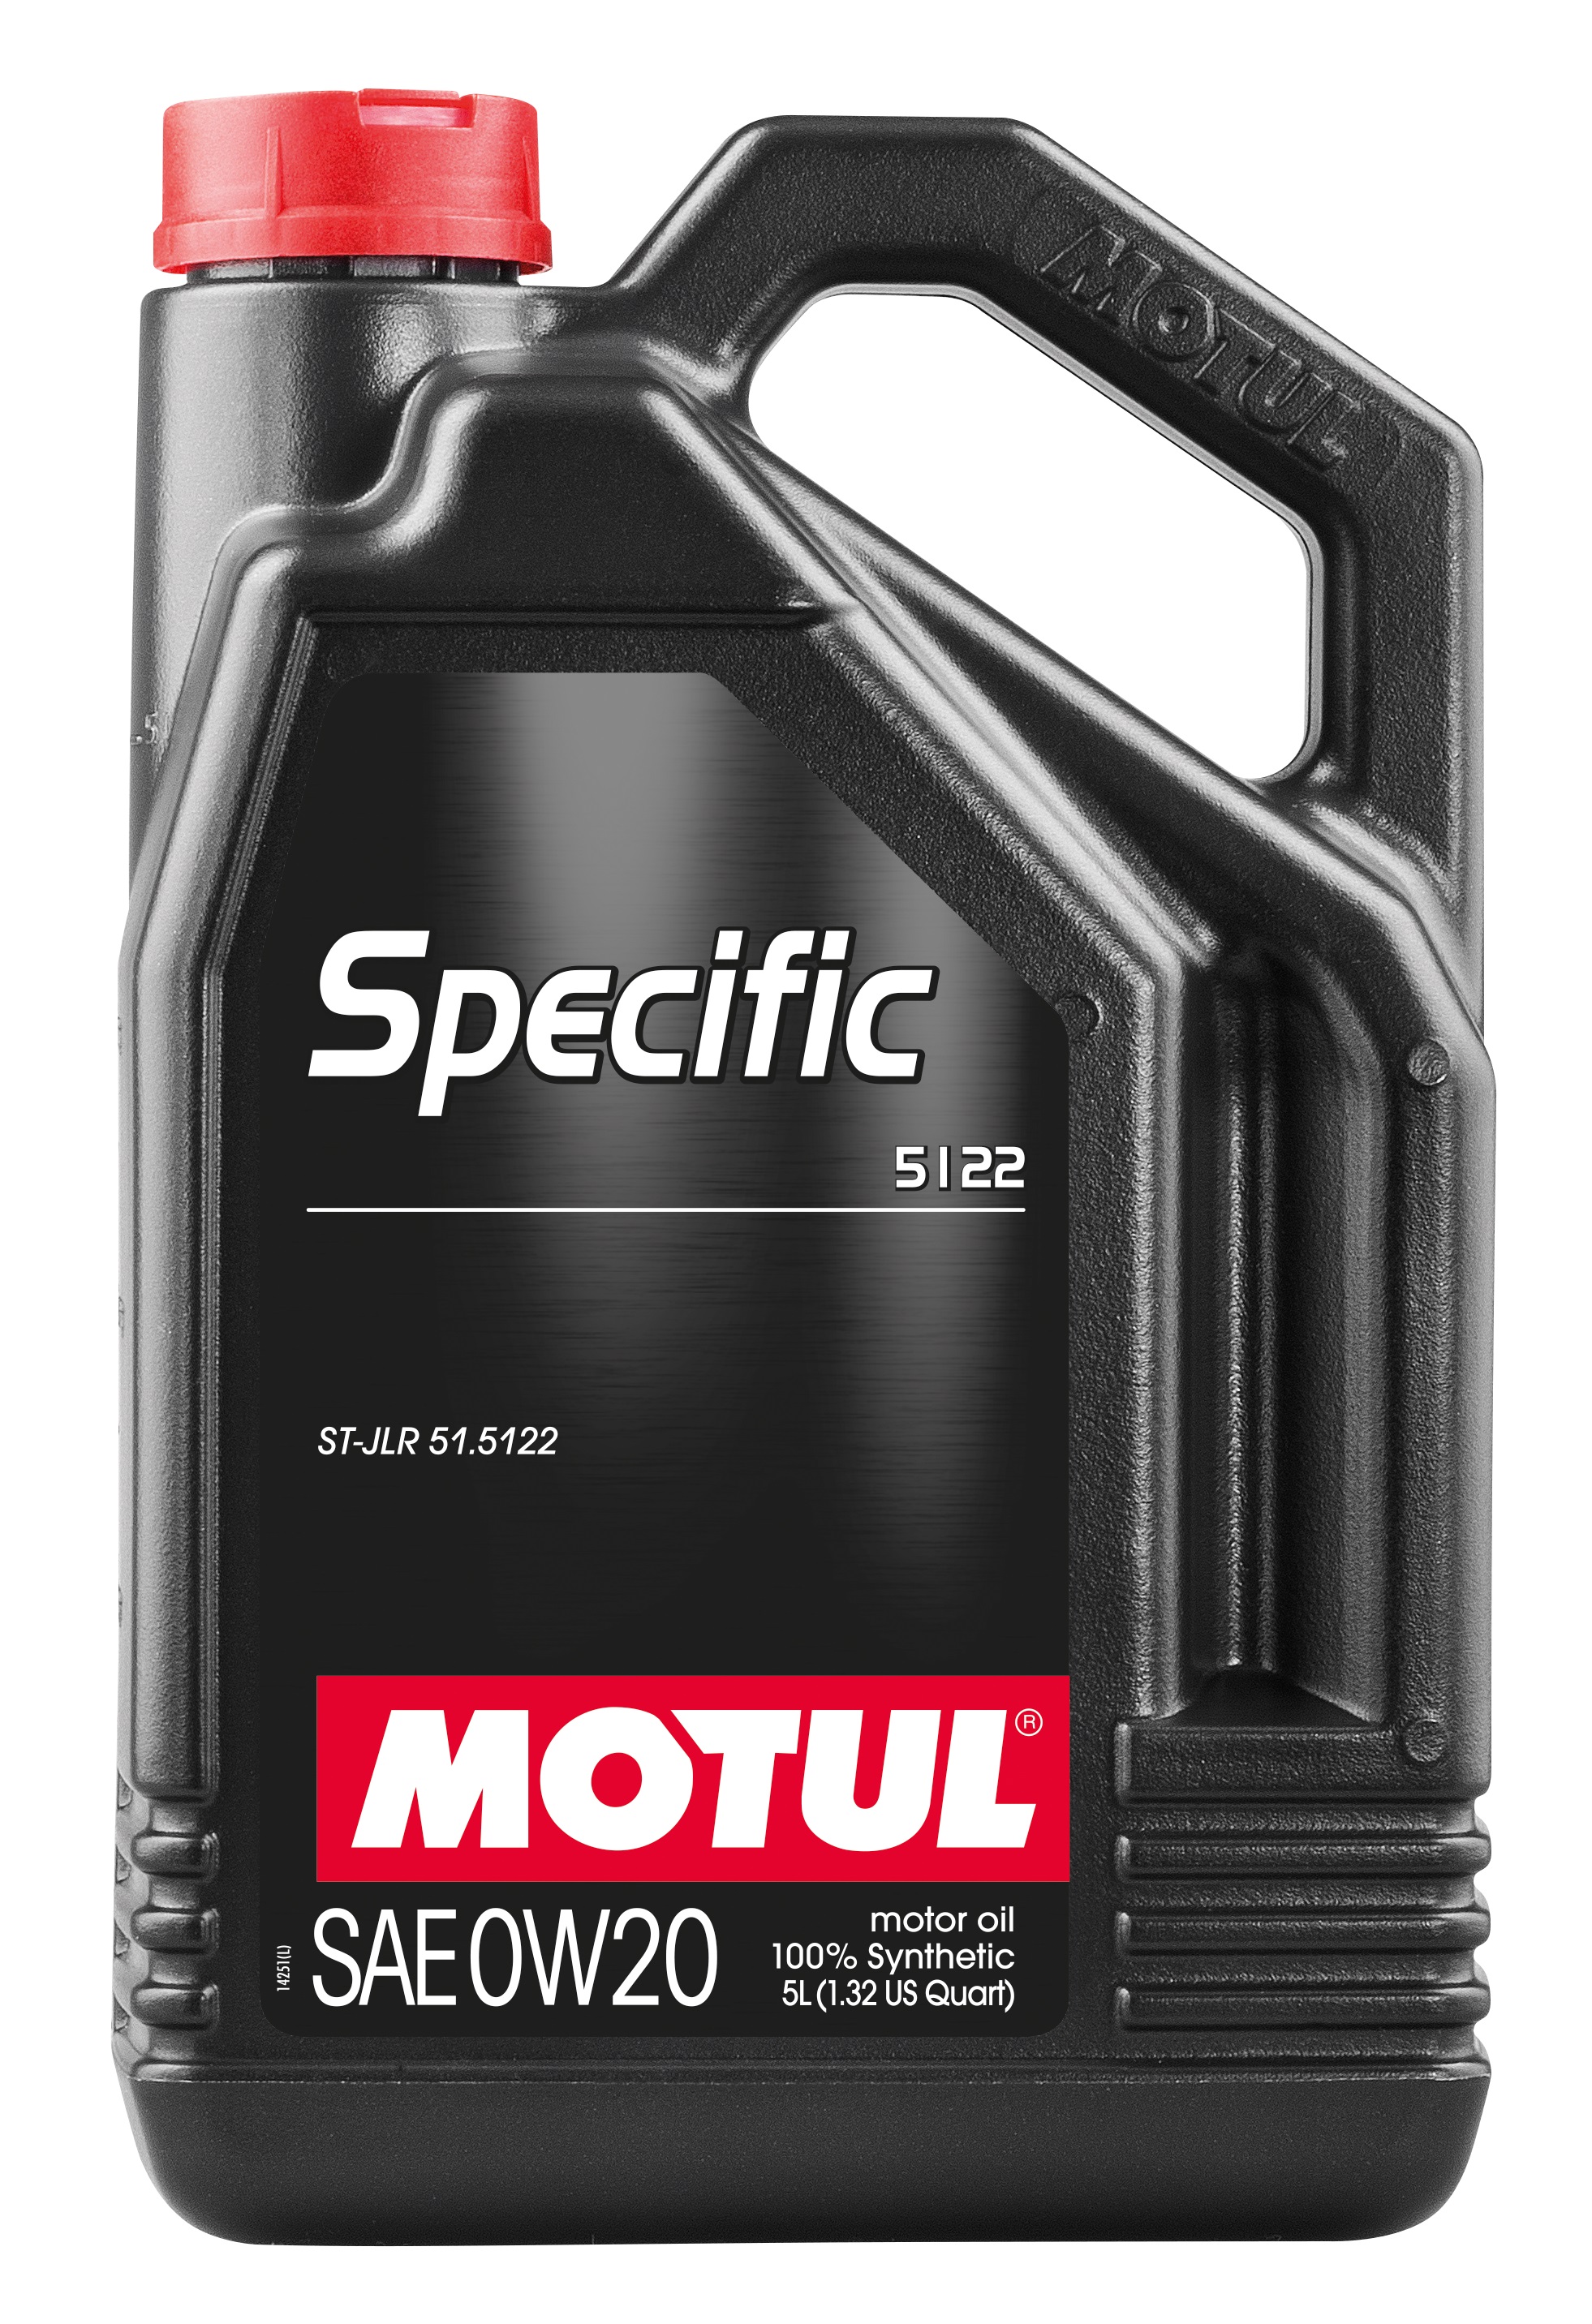 MOTUL SPECIFIC 5122 0W20 - 5L - Synthetic Engine Oil